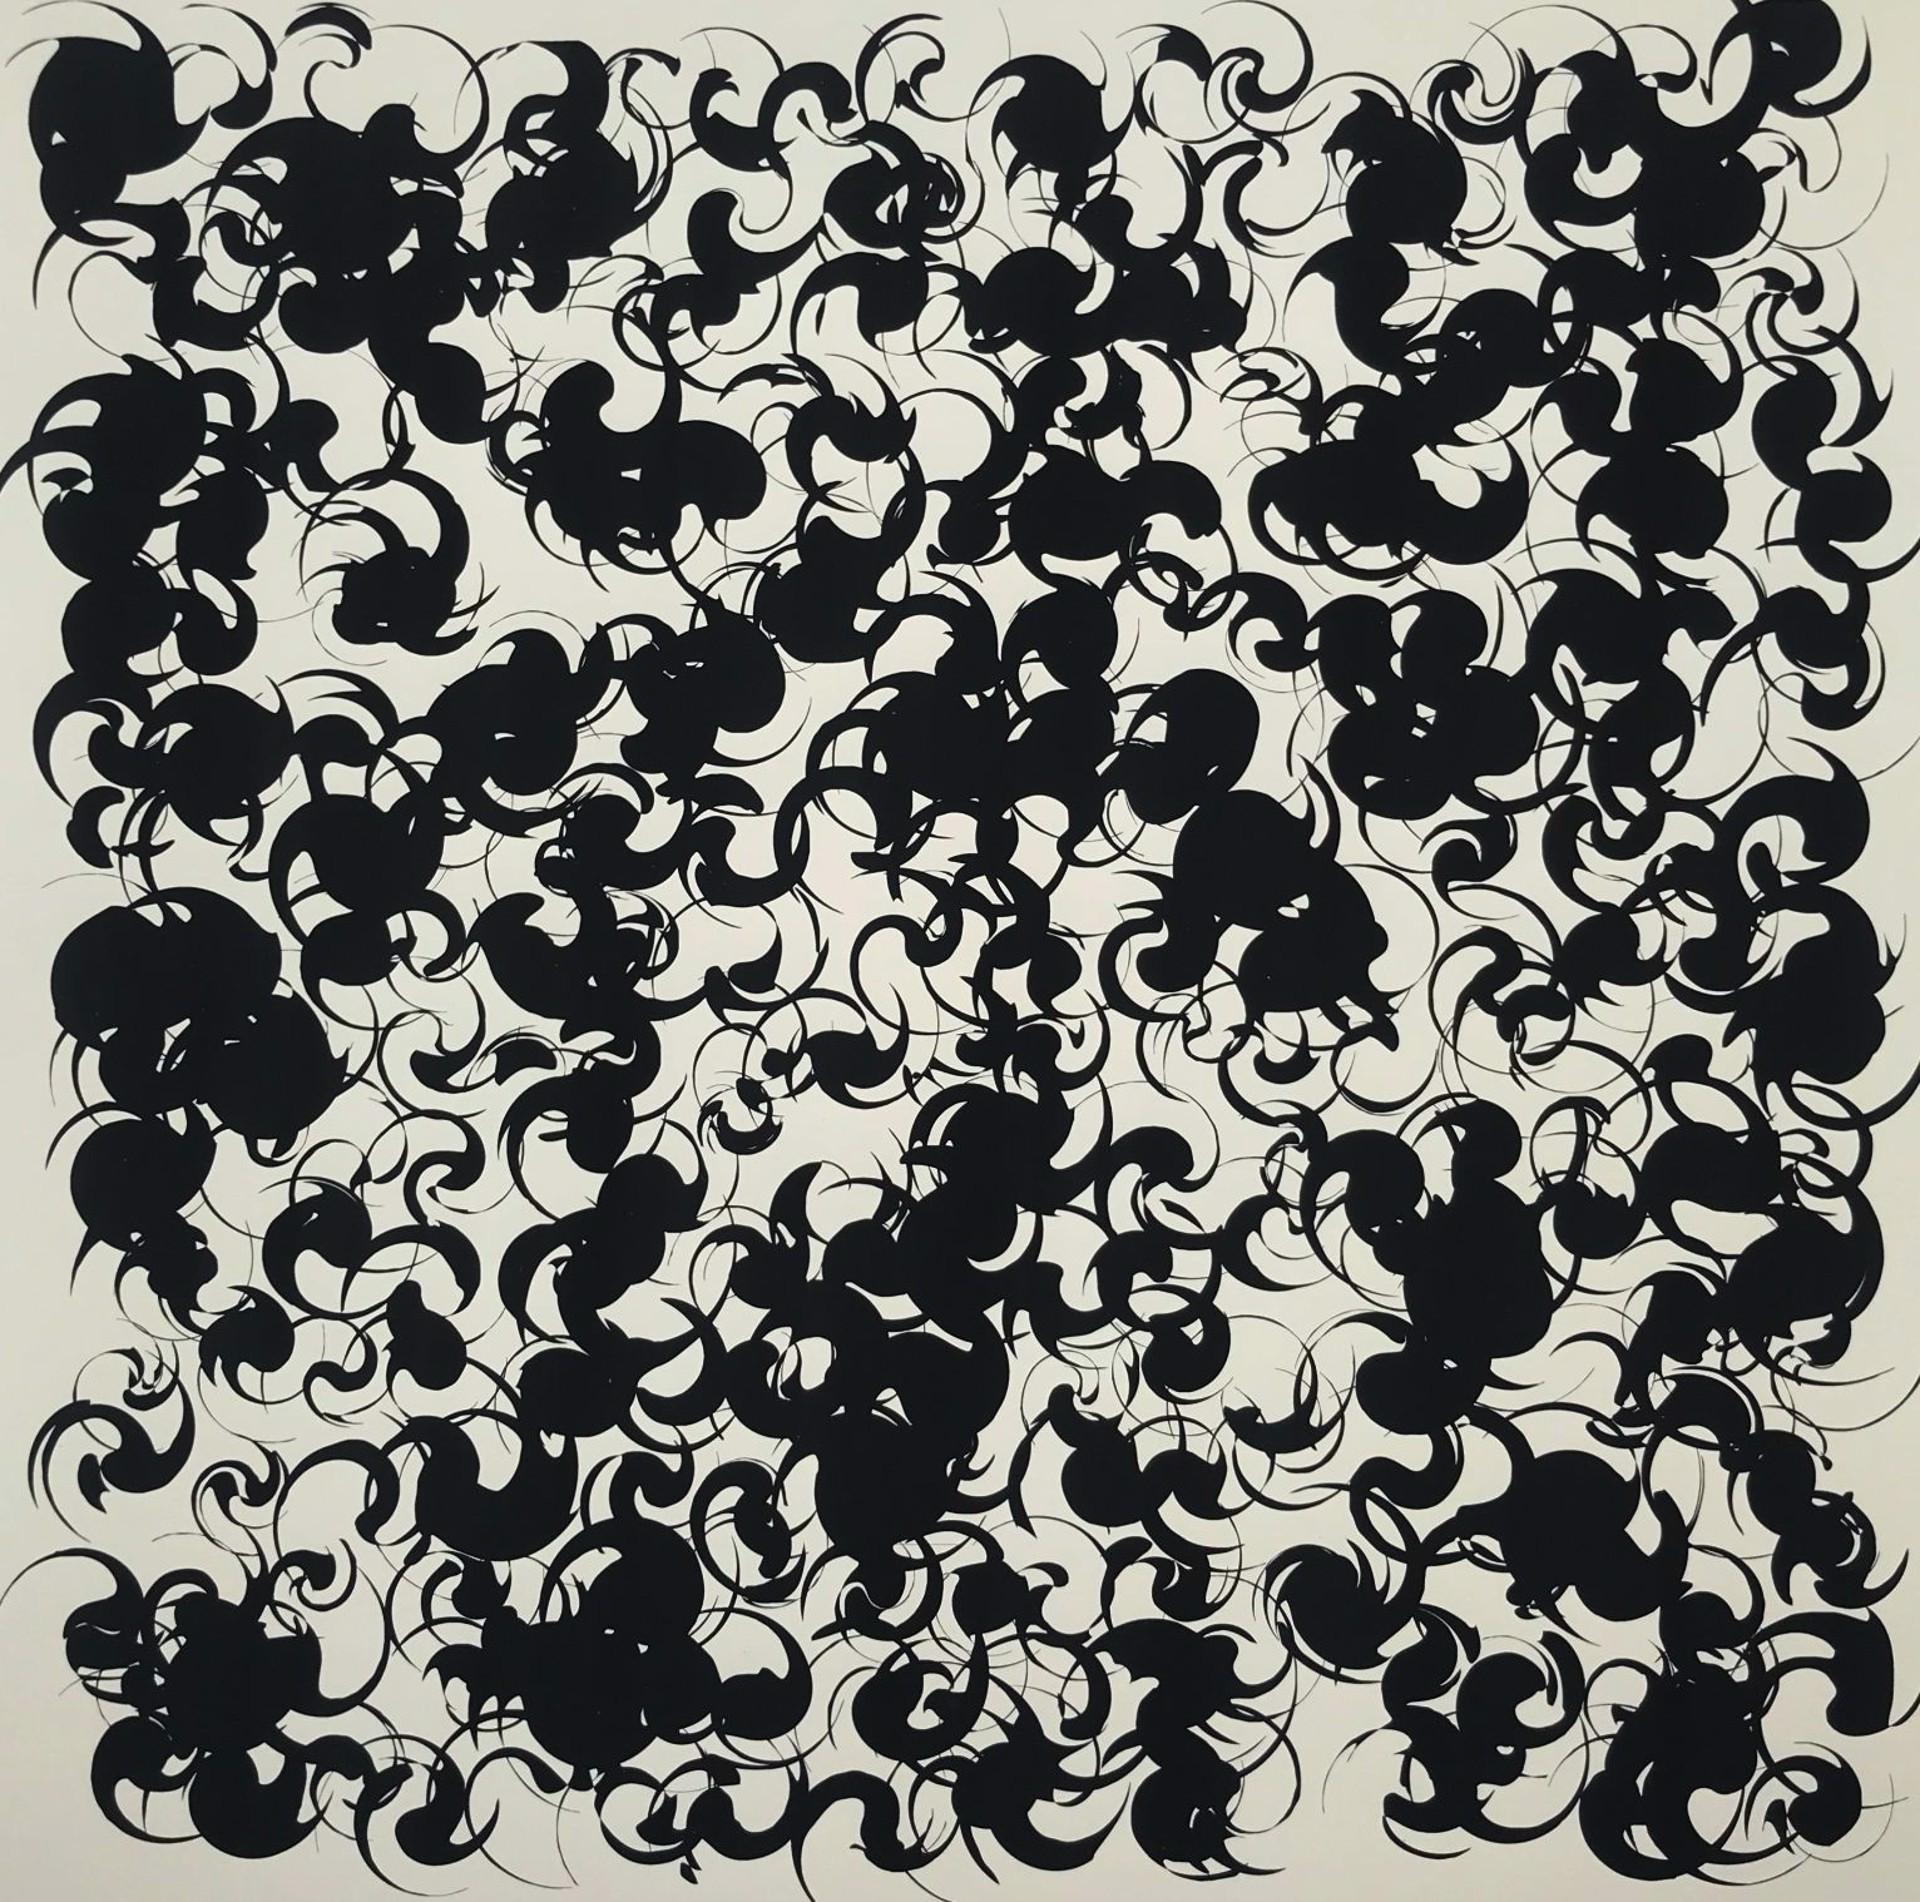 Peter Feldstein Abstract Print - 12-7-11-4